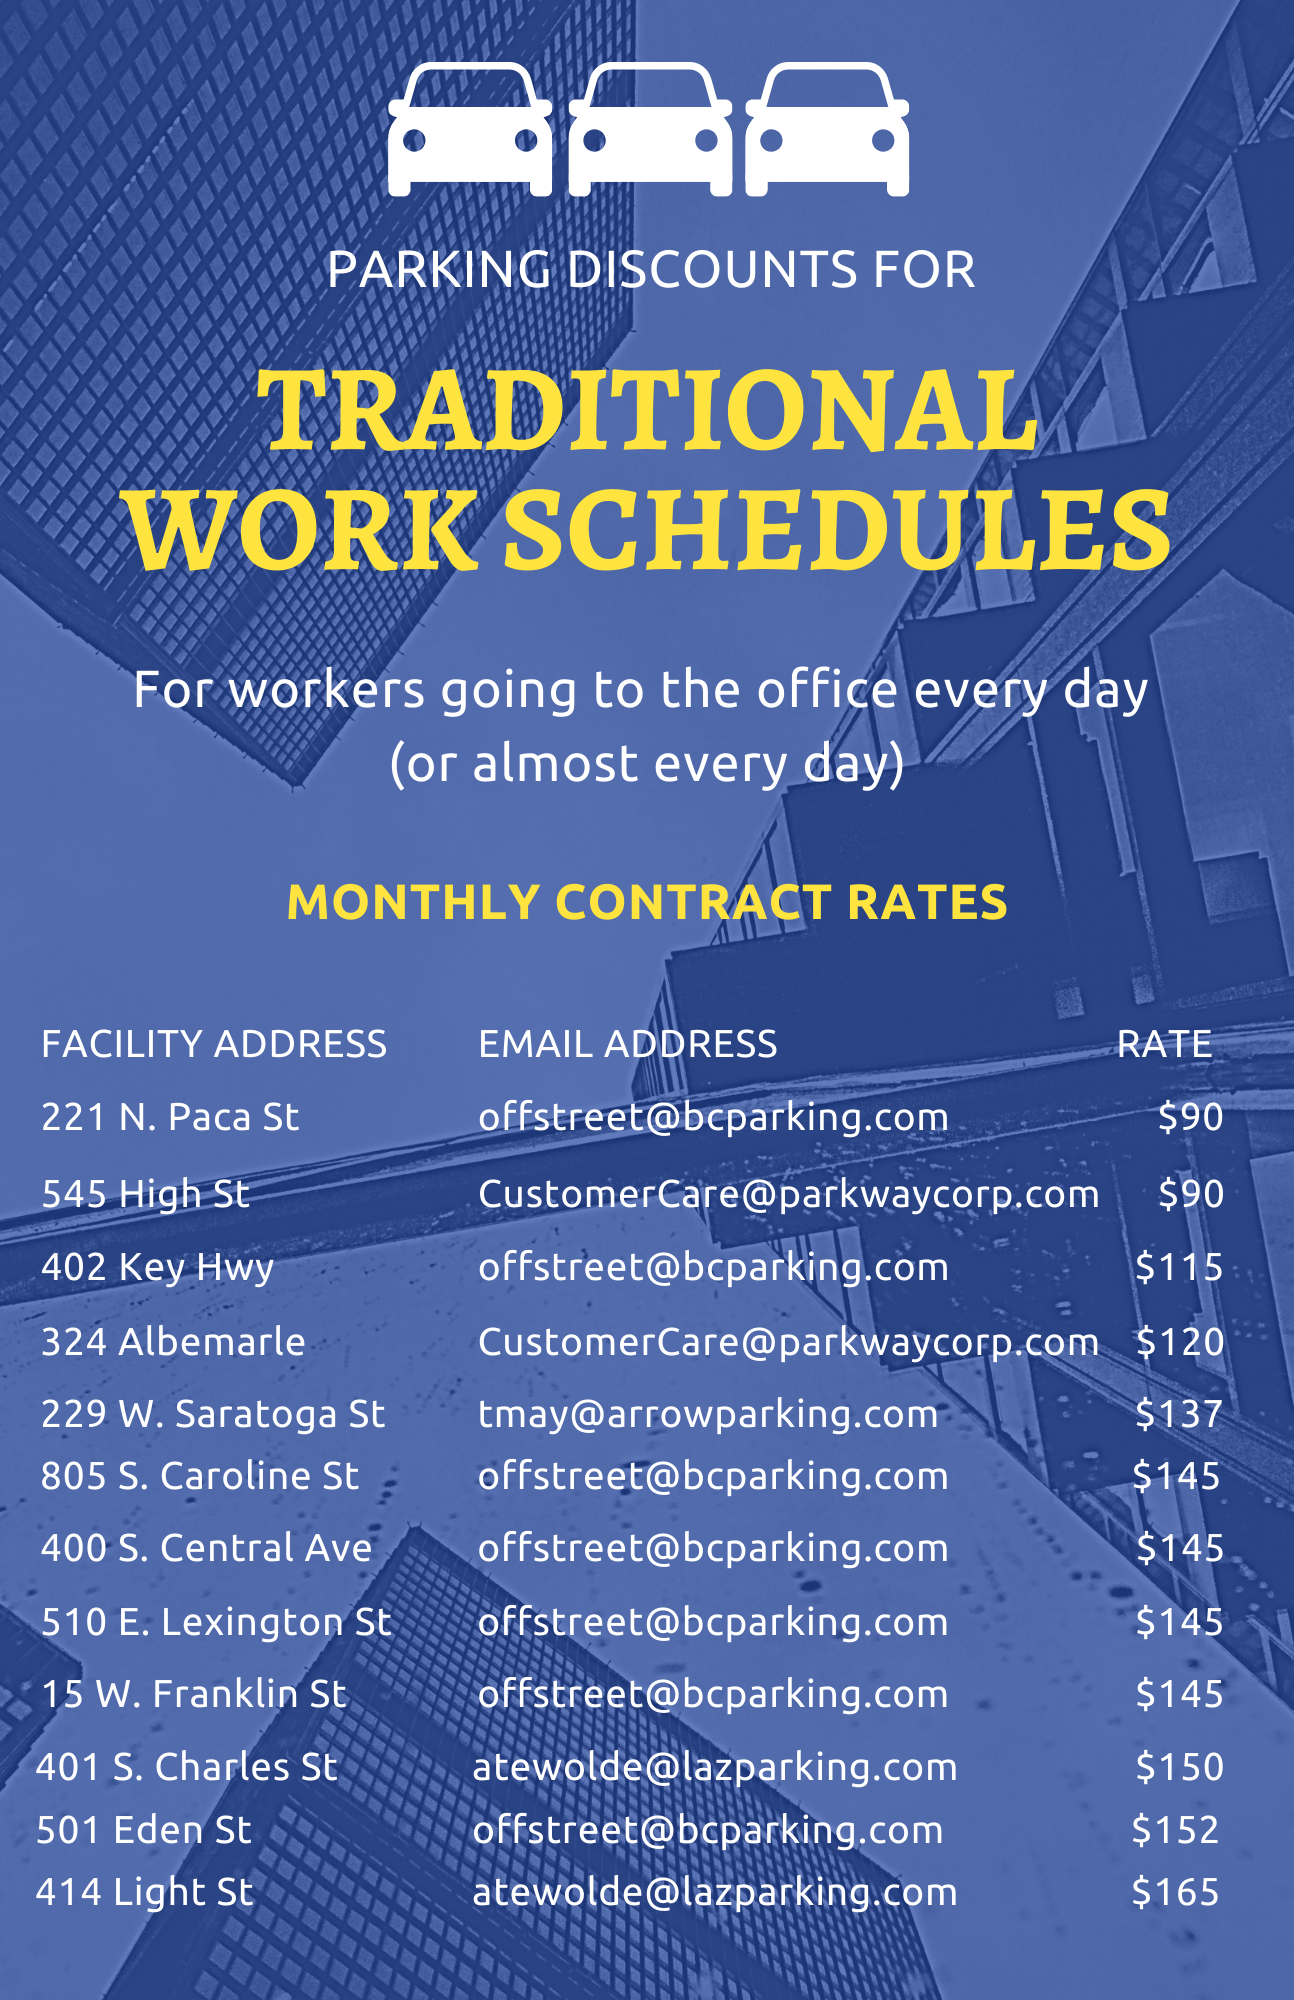 Traditional Work Schedule Discounts